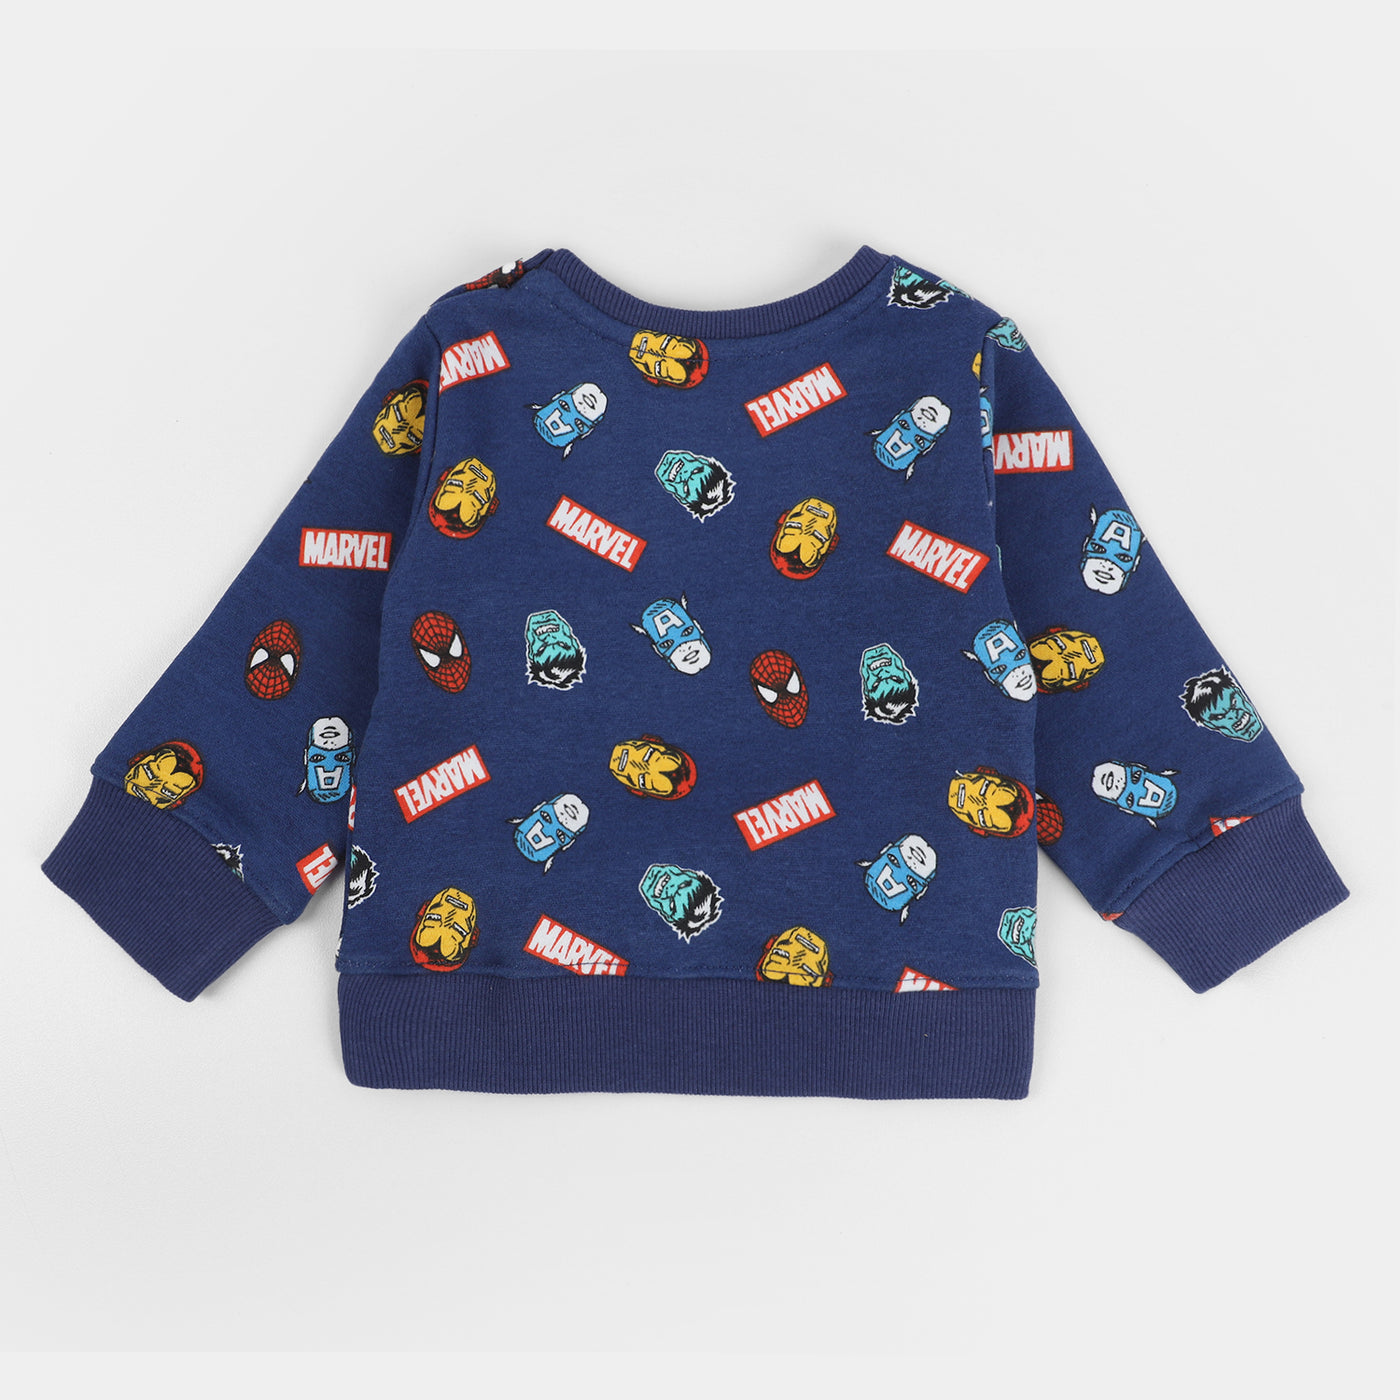 Infant Boys Fleece Knitted Suit Marvel-Navy Blue